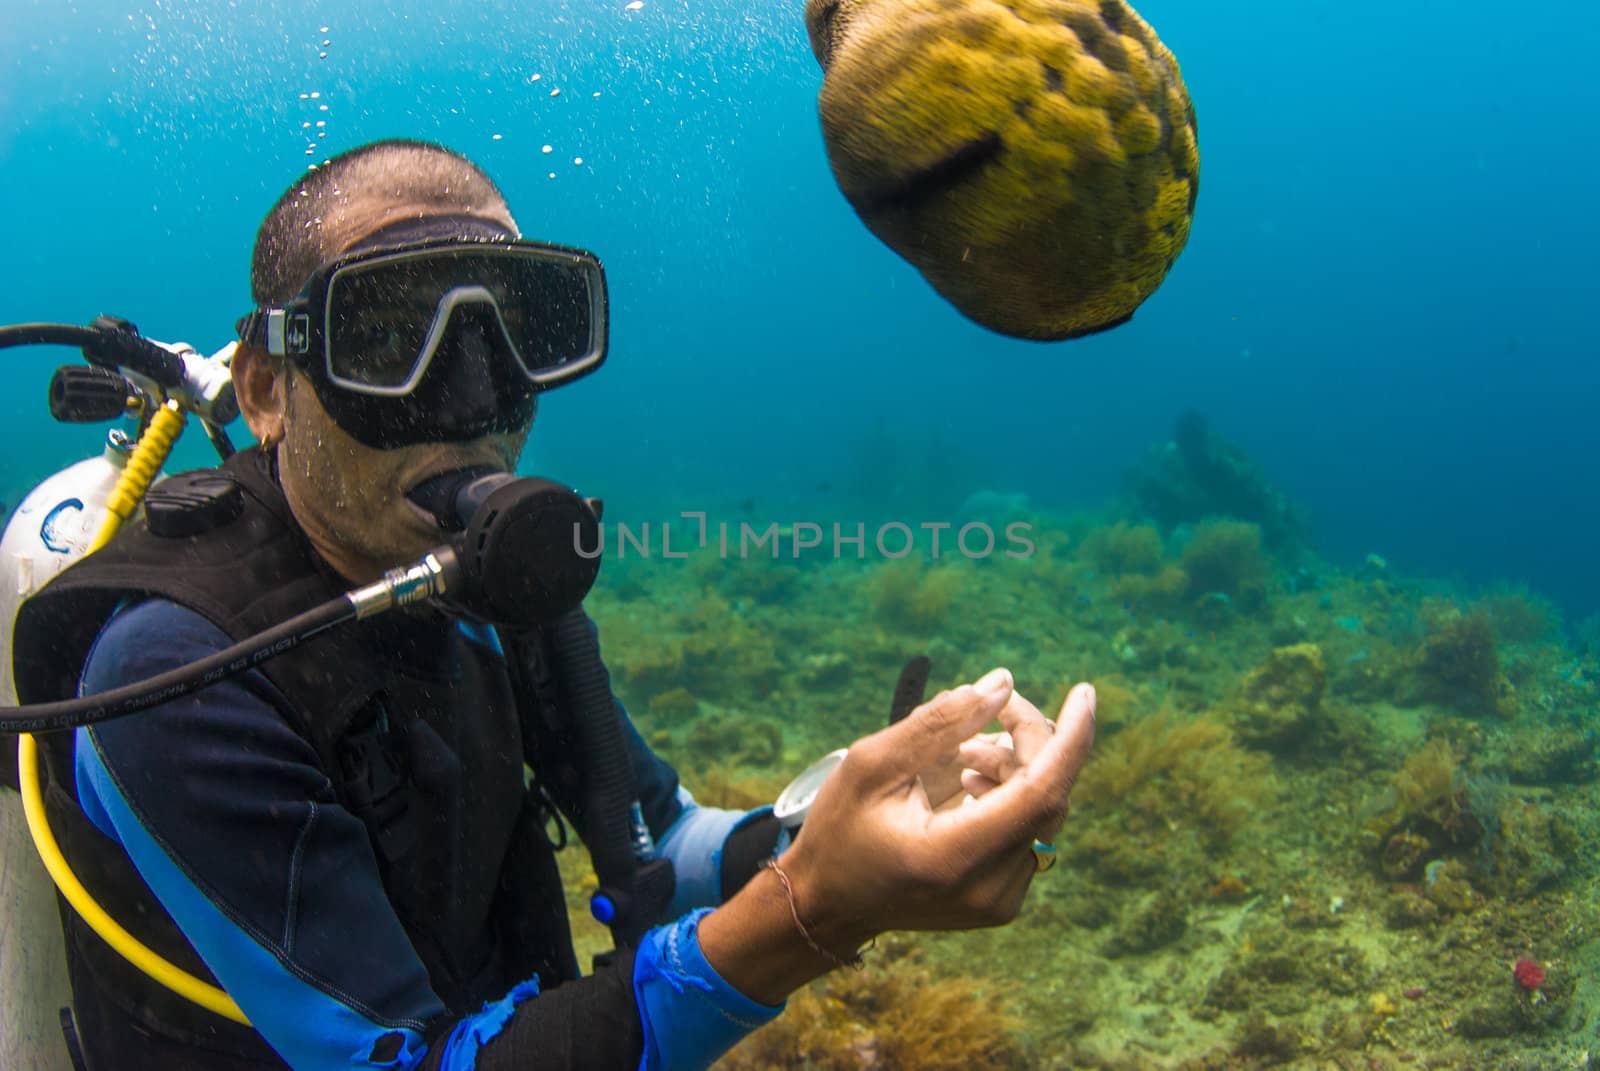 Scuba diver holding sea cucumber by edan